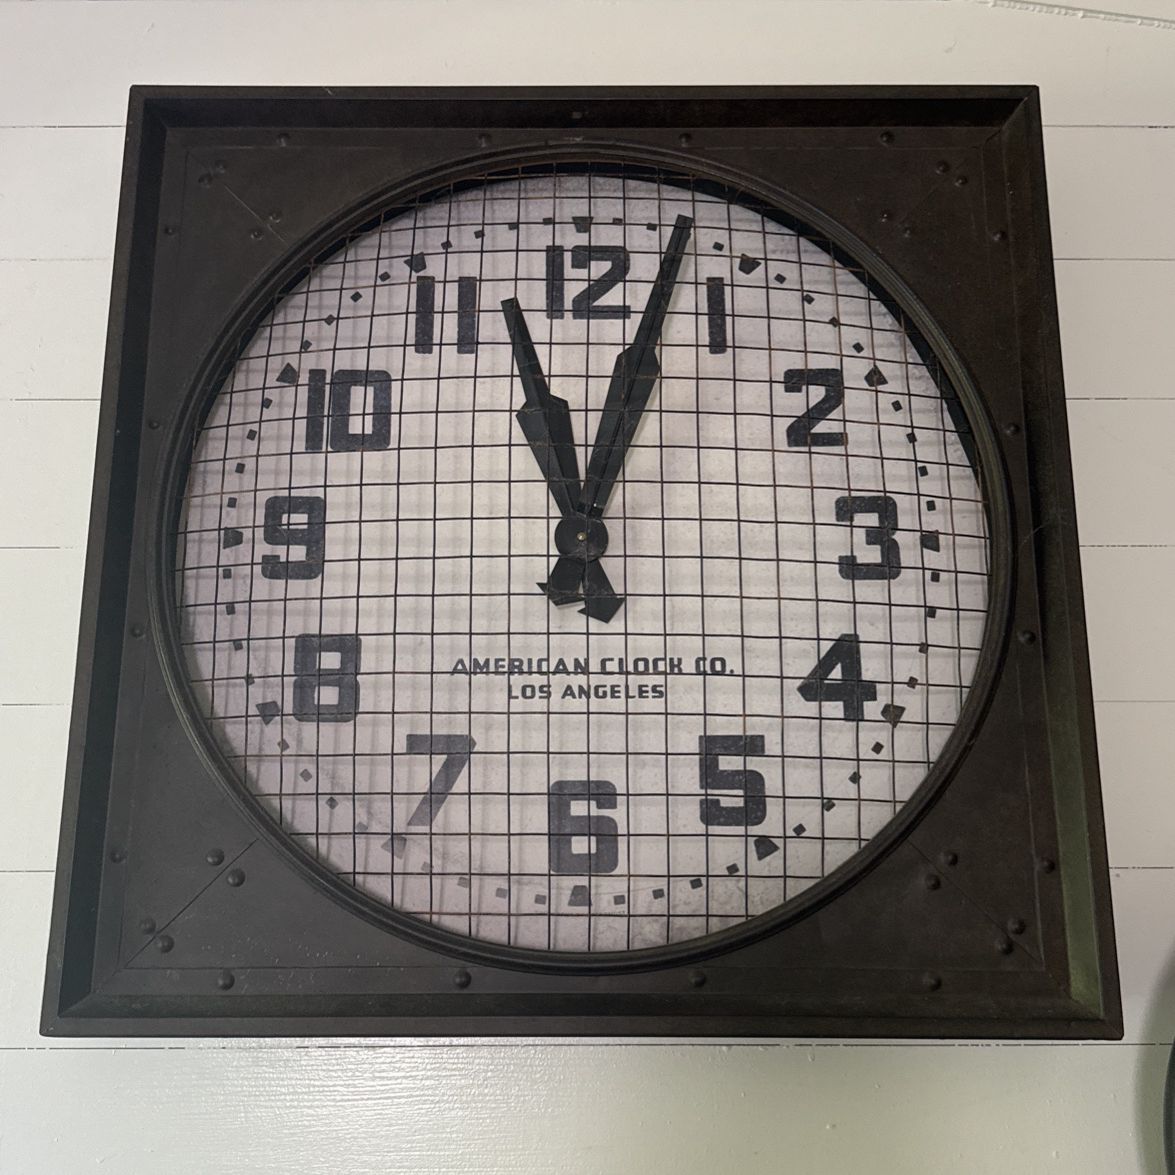 RH Gymnasium Clock